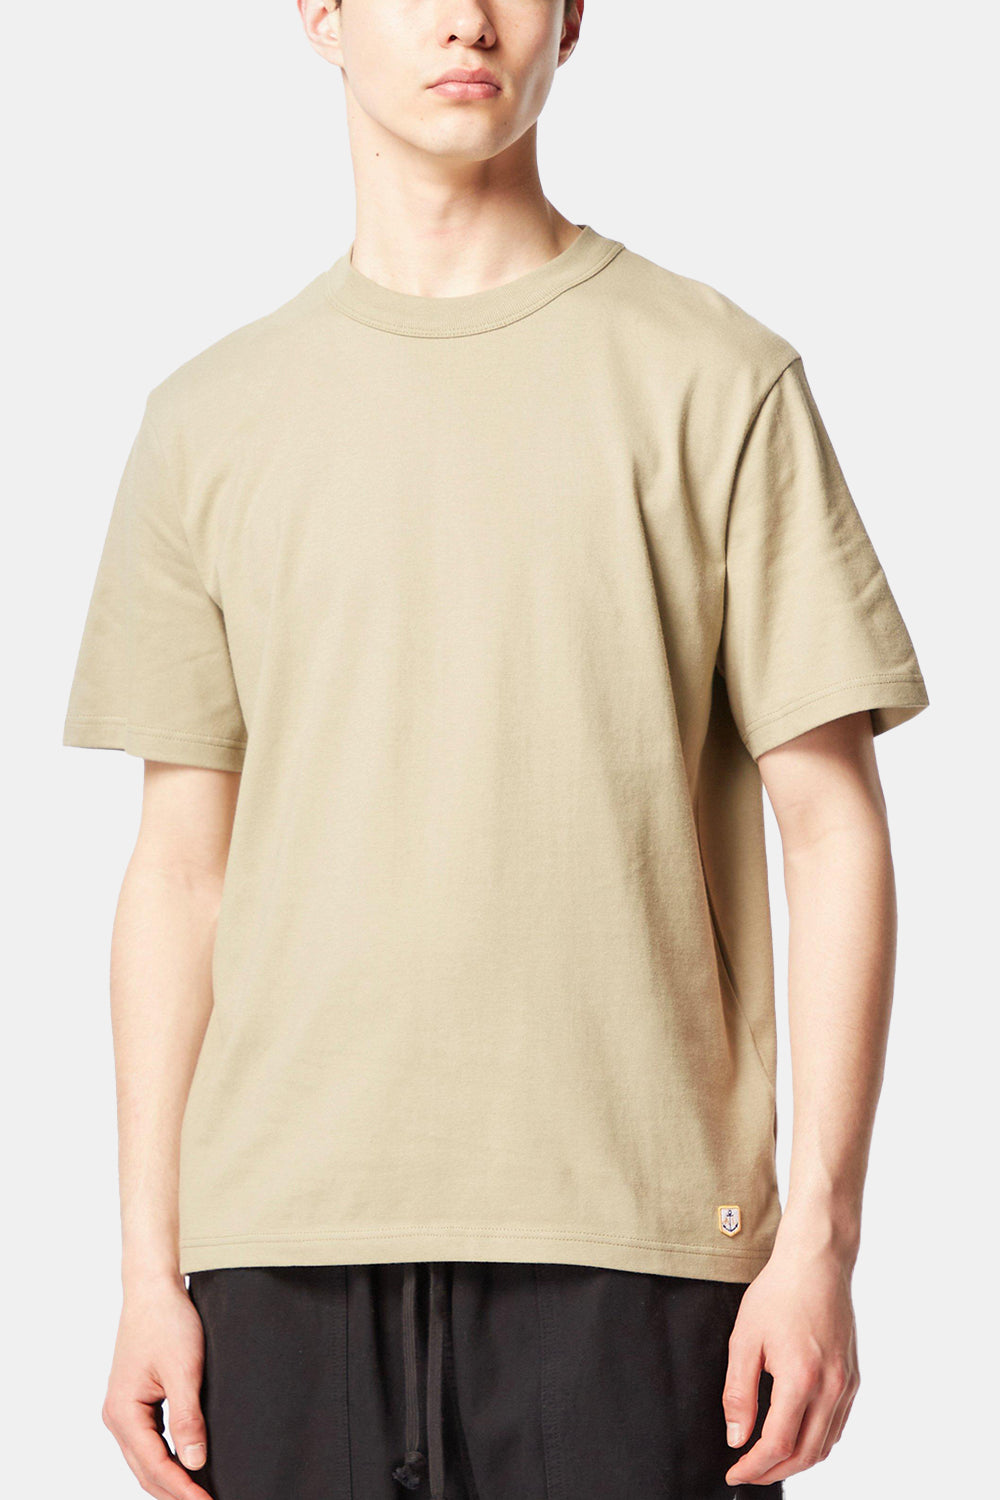 Armor Lux Heritage Organic Callac T-Shirt (Genet Yellow)